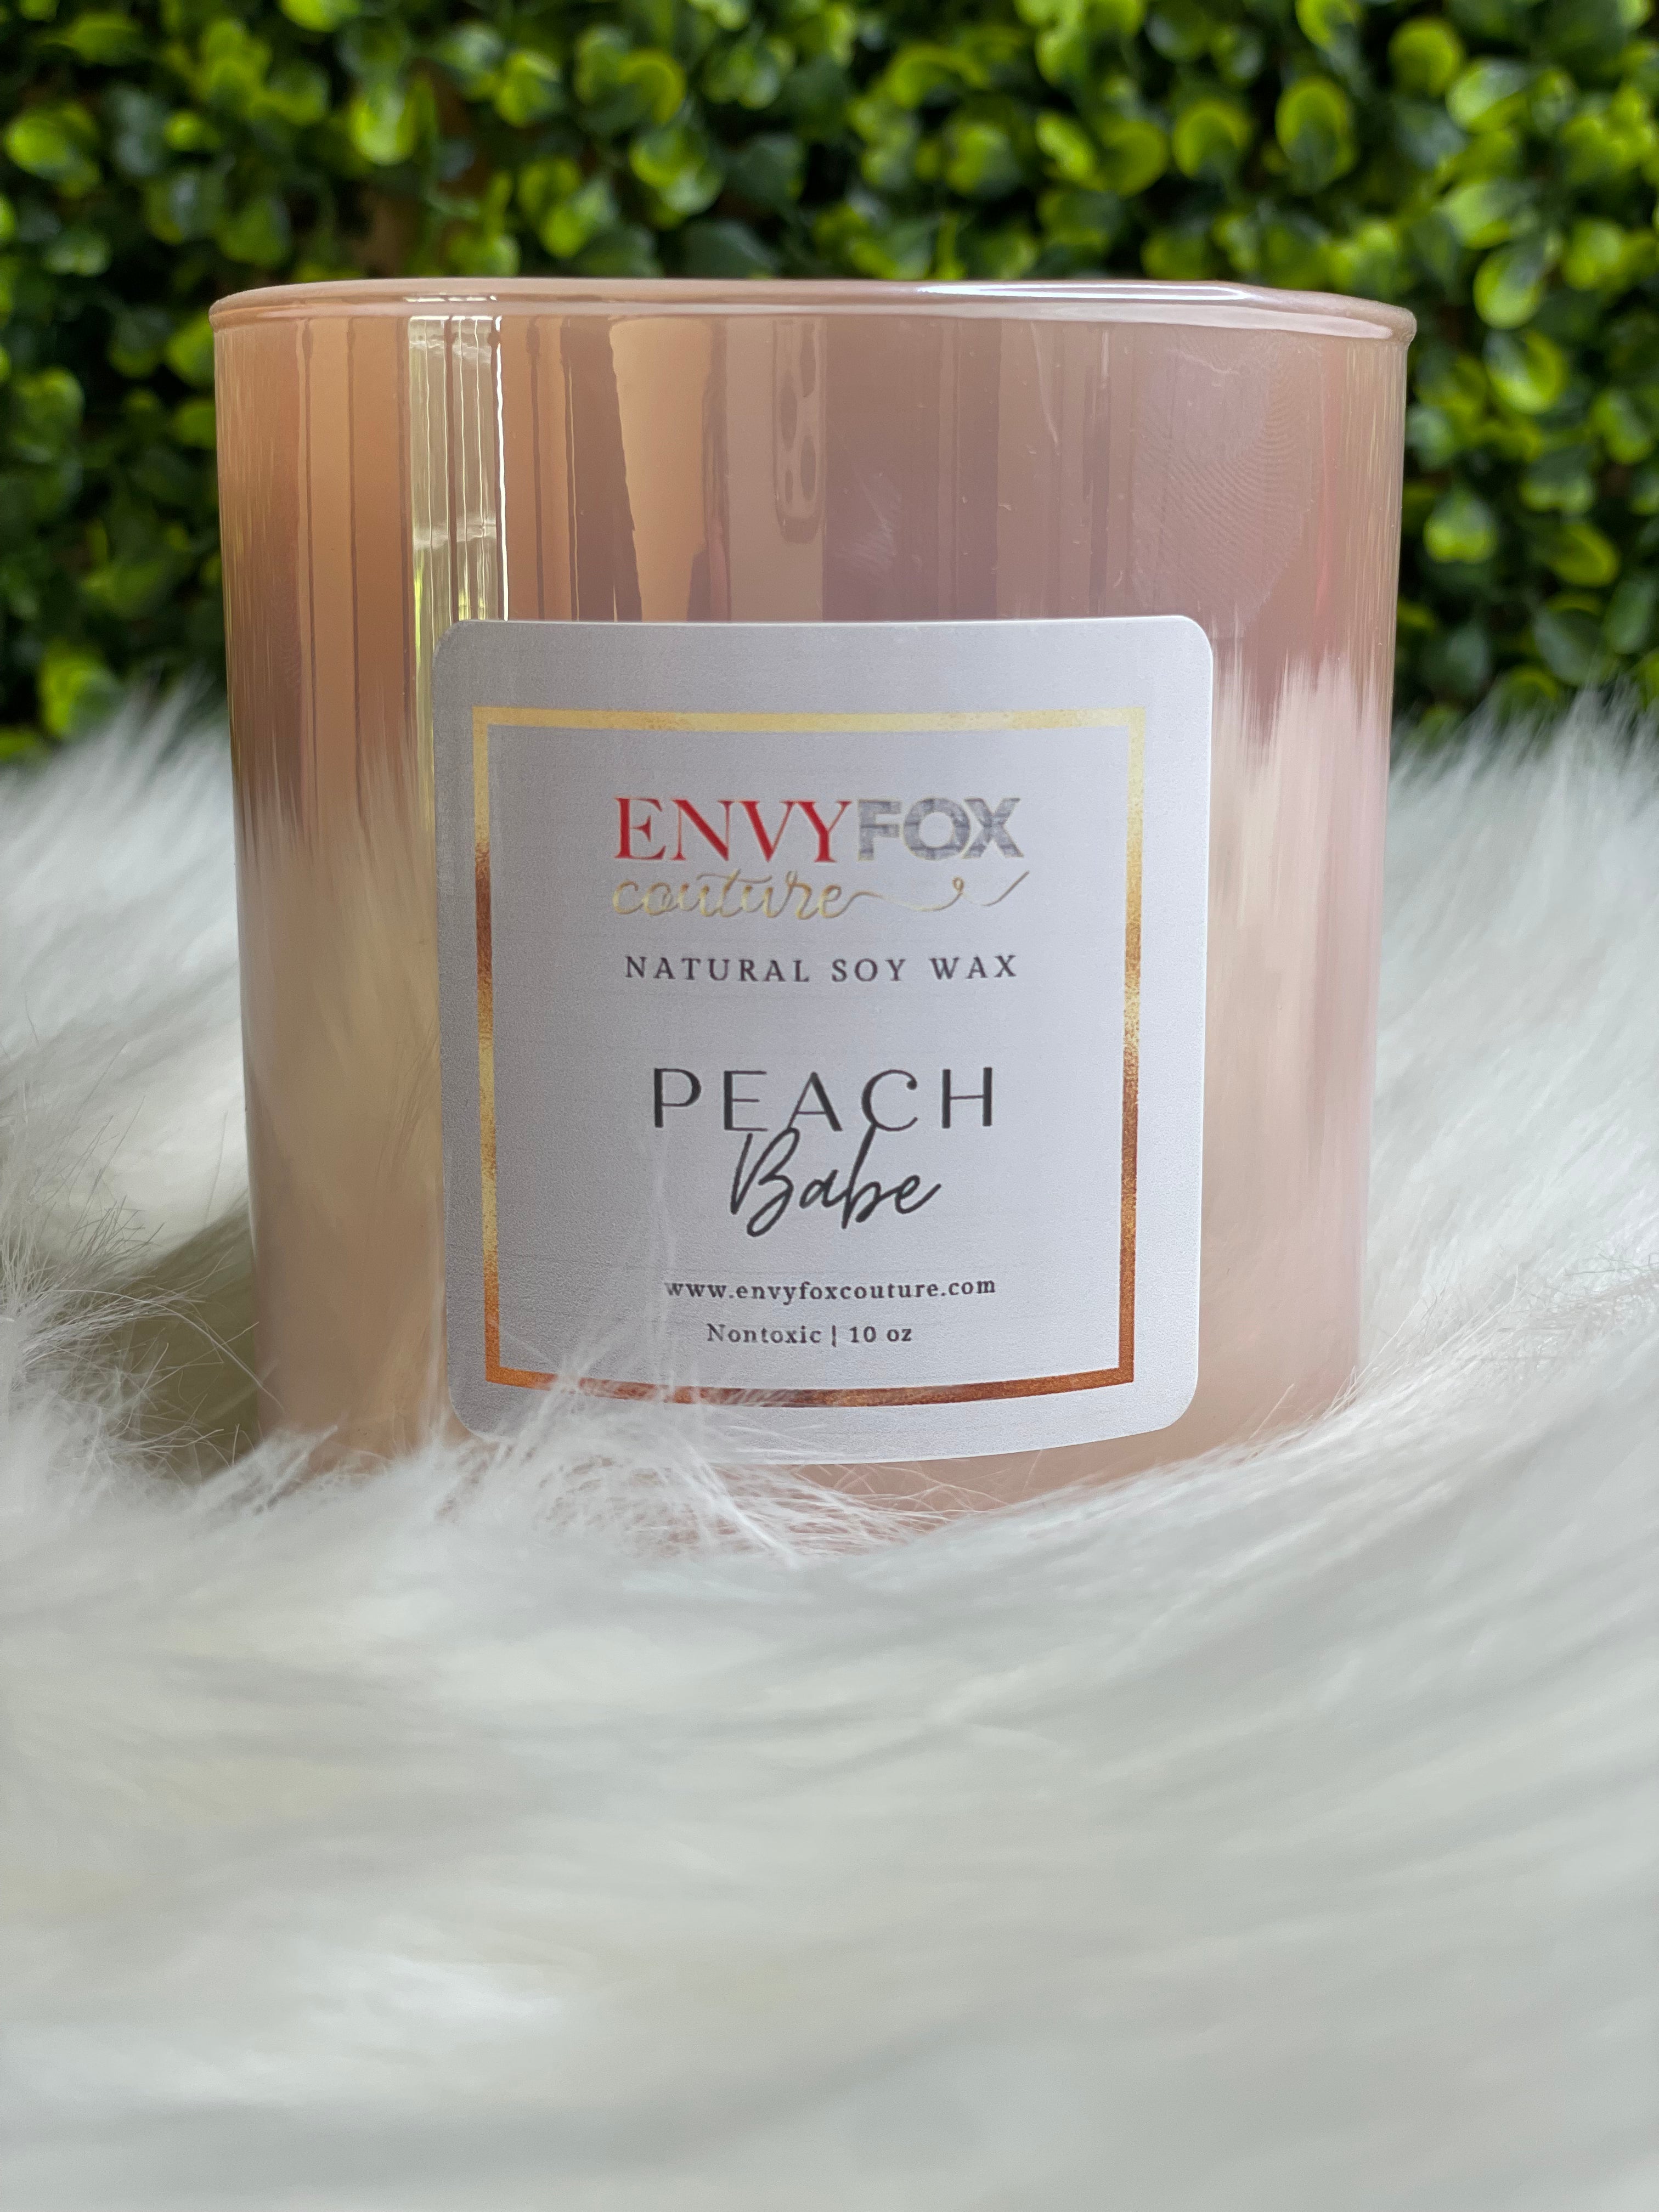 Peach Babe 10 oz Natural Soy Wax Candle